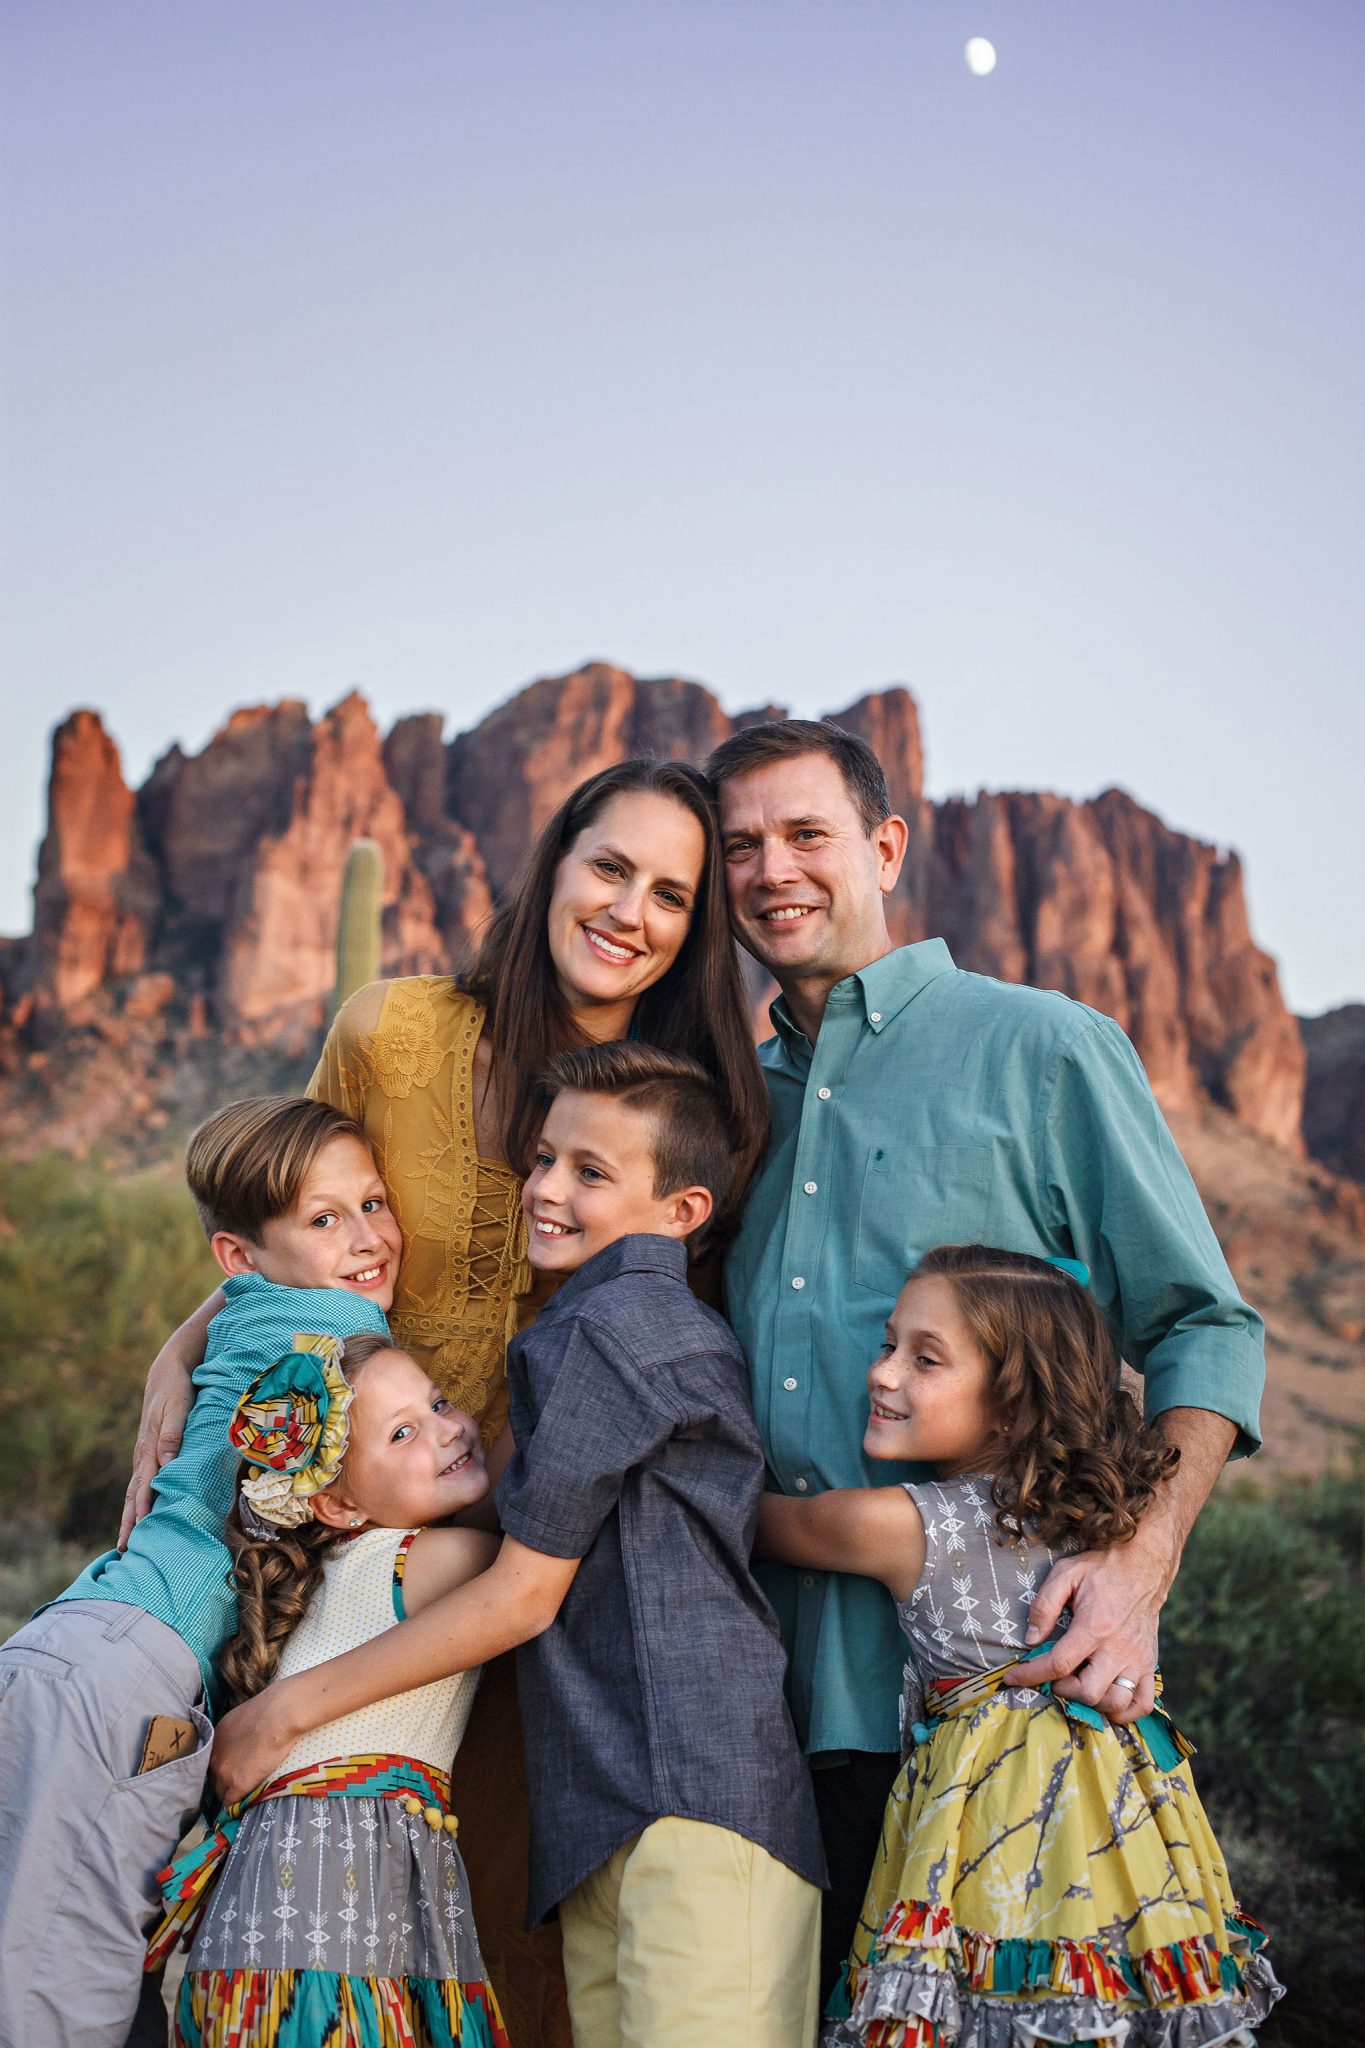 Family photography at Superstition Mountain near Phoenix, AZ